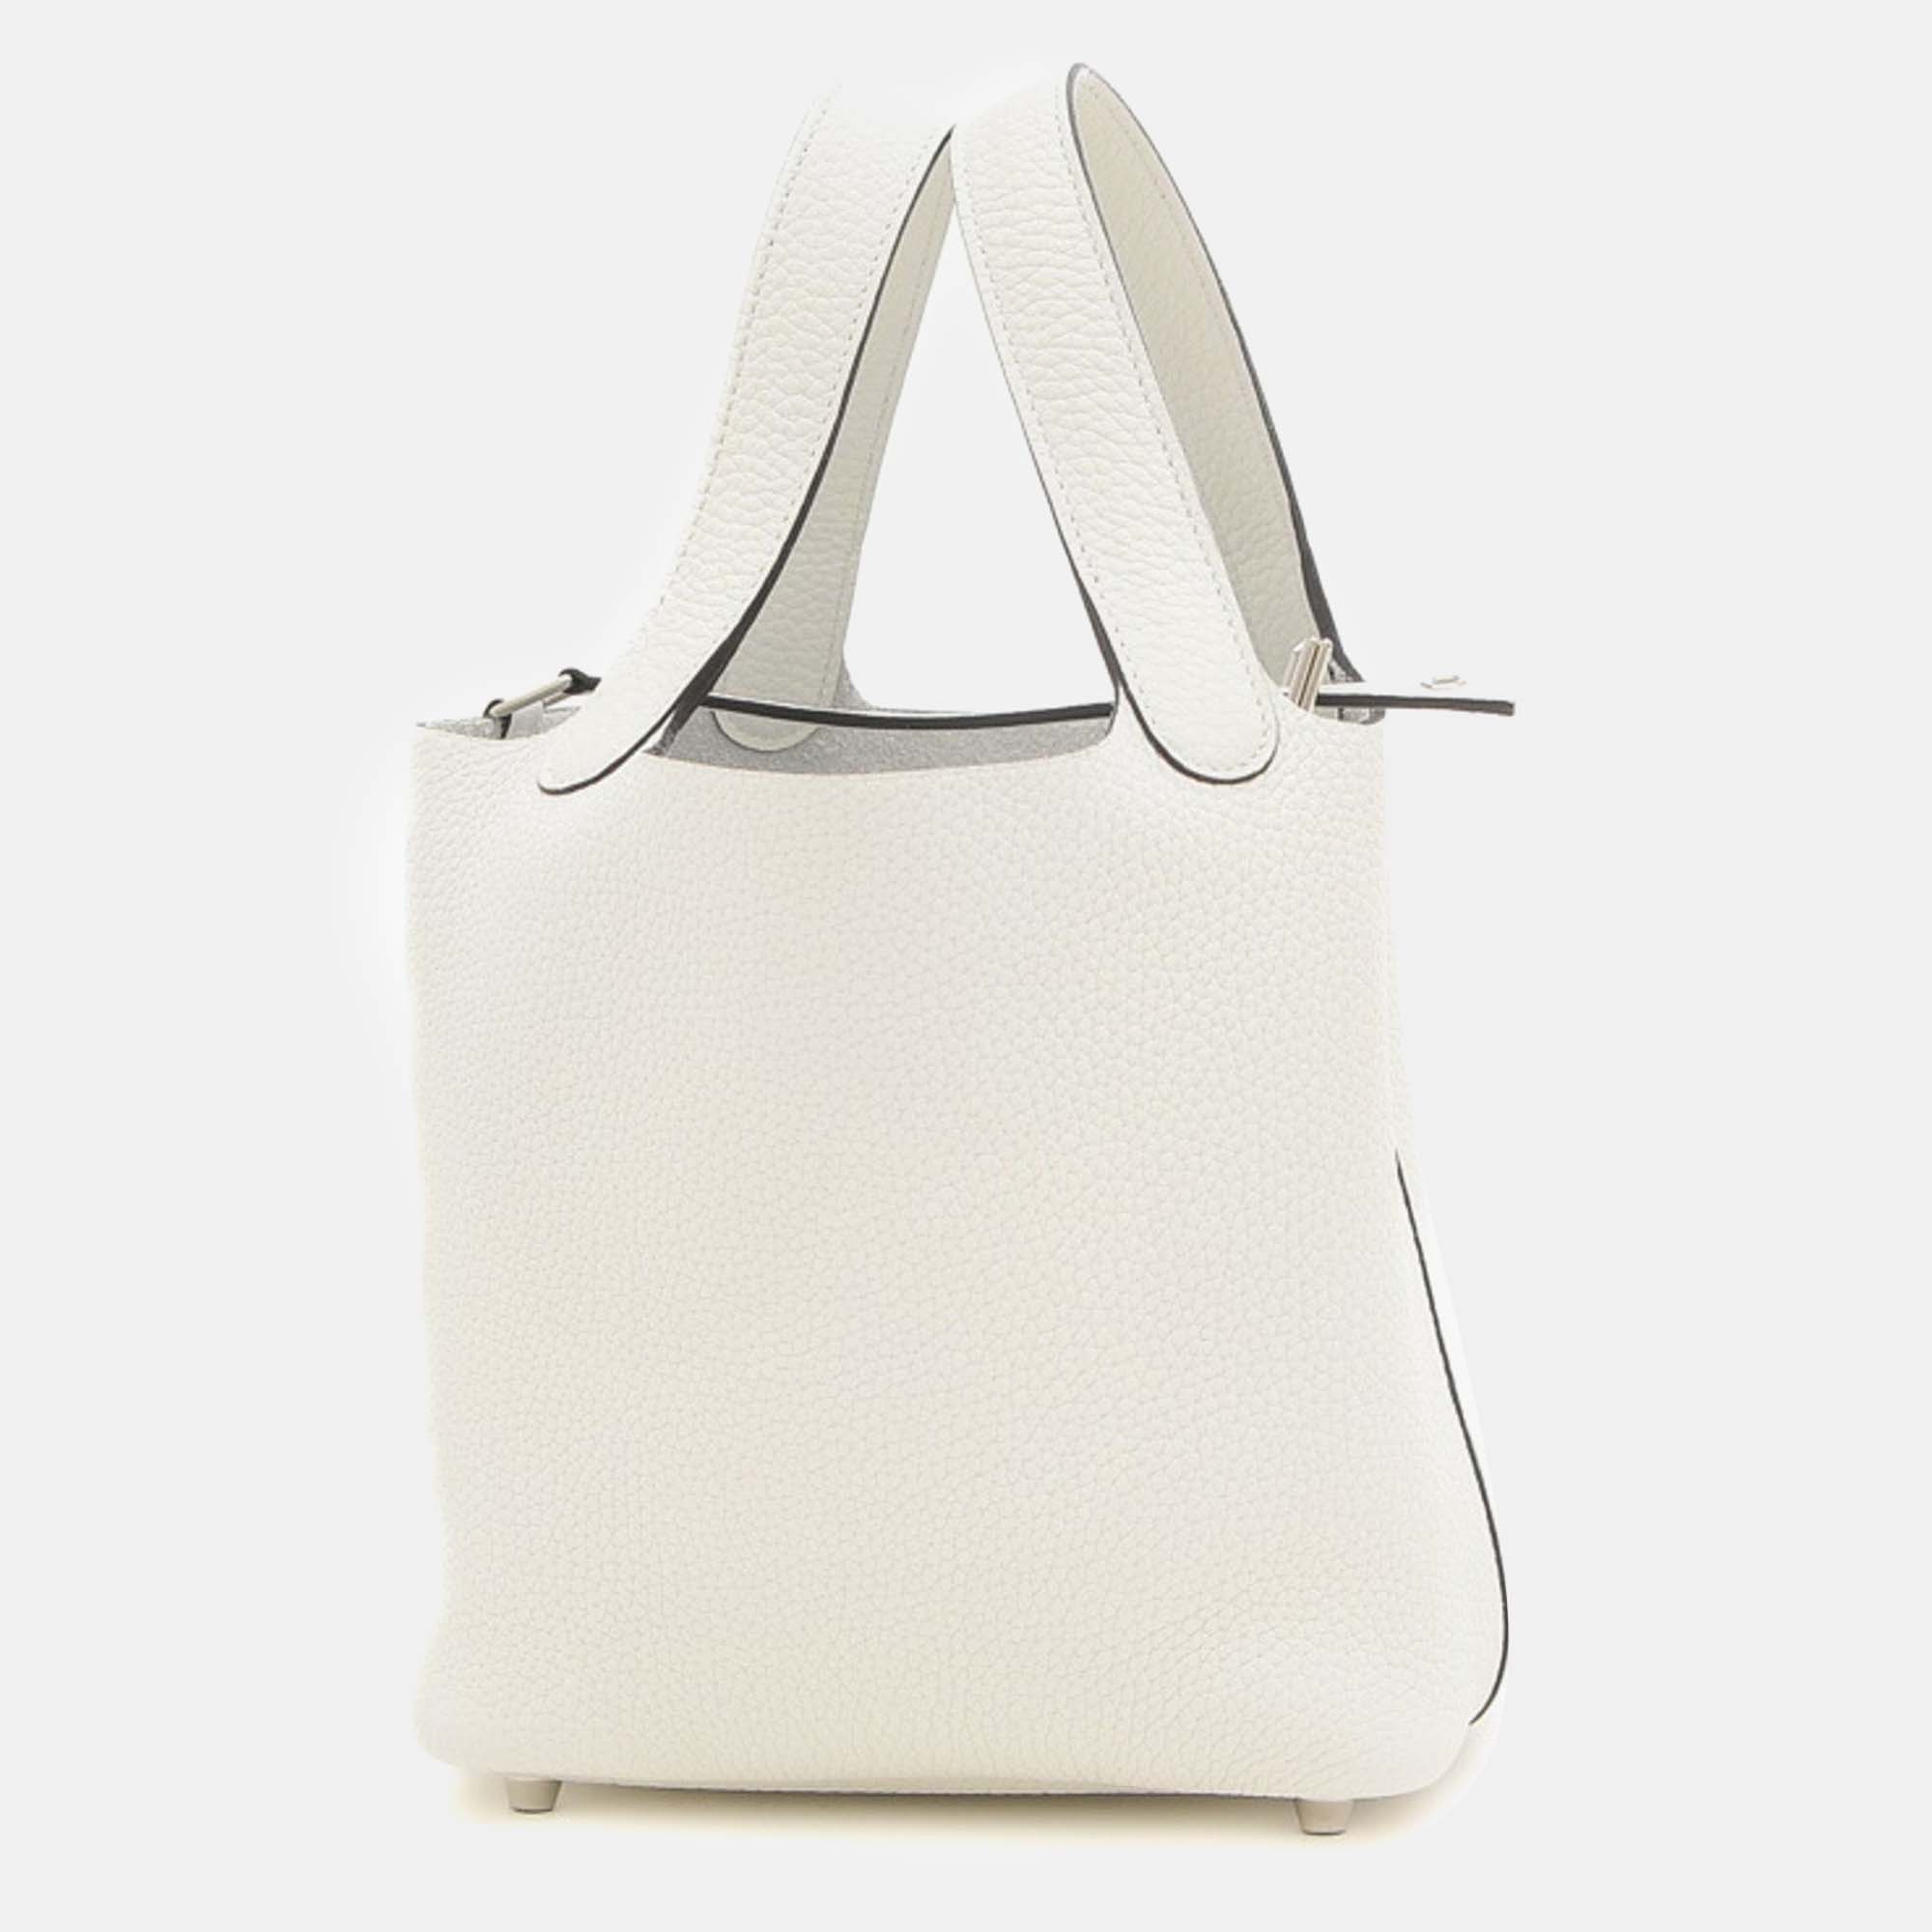 Hermes new white taurillon clemence picotin lock pm handbag